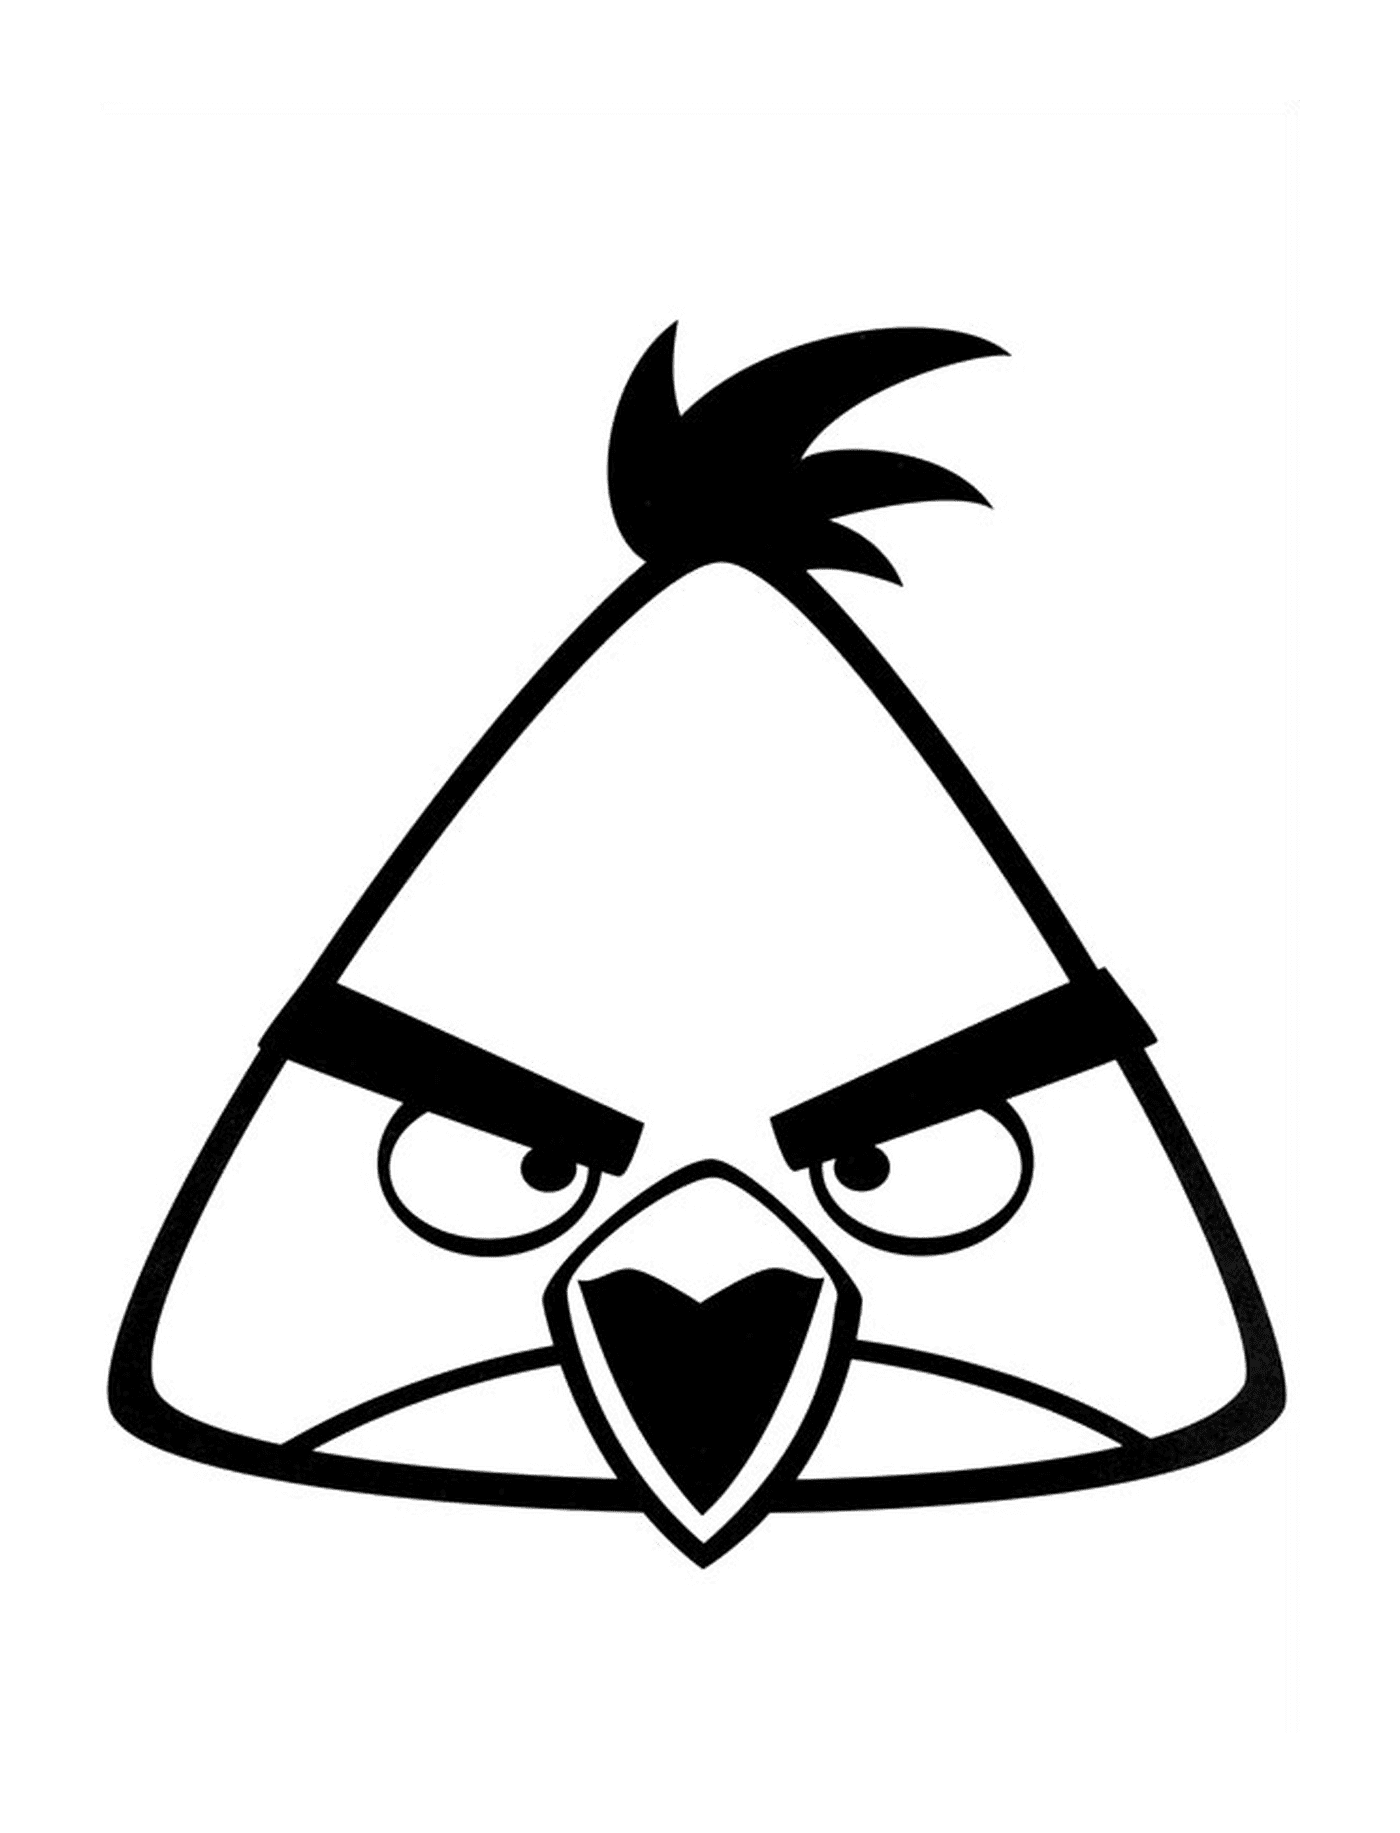  Programa de ataque triángulo Angry Birds 